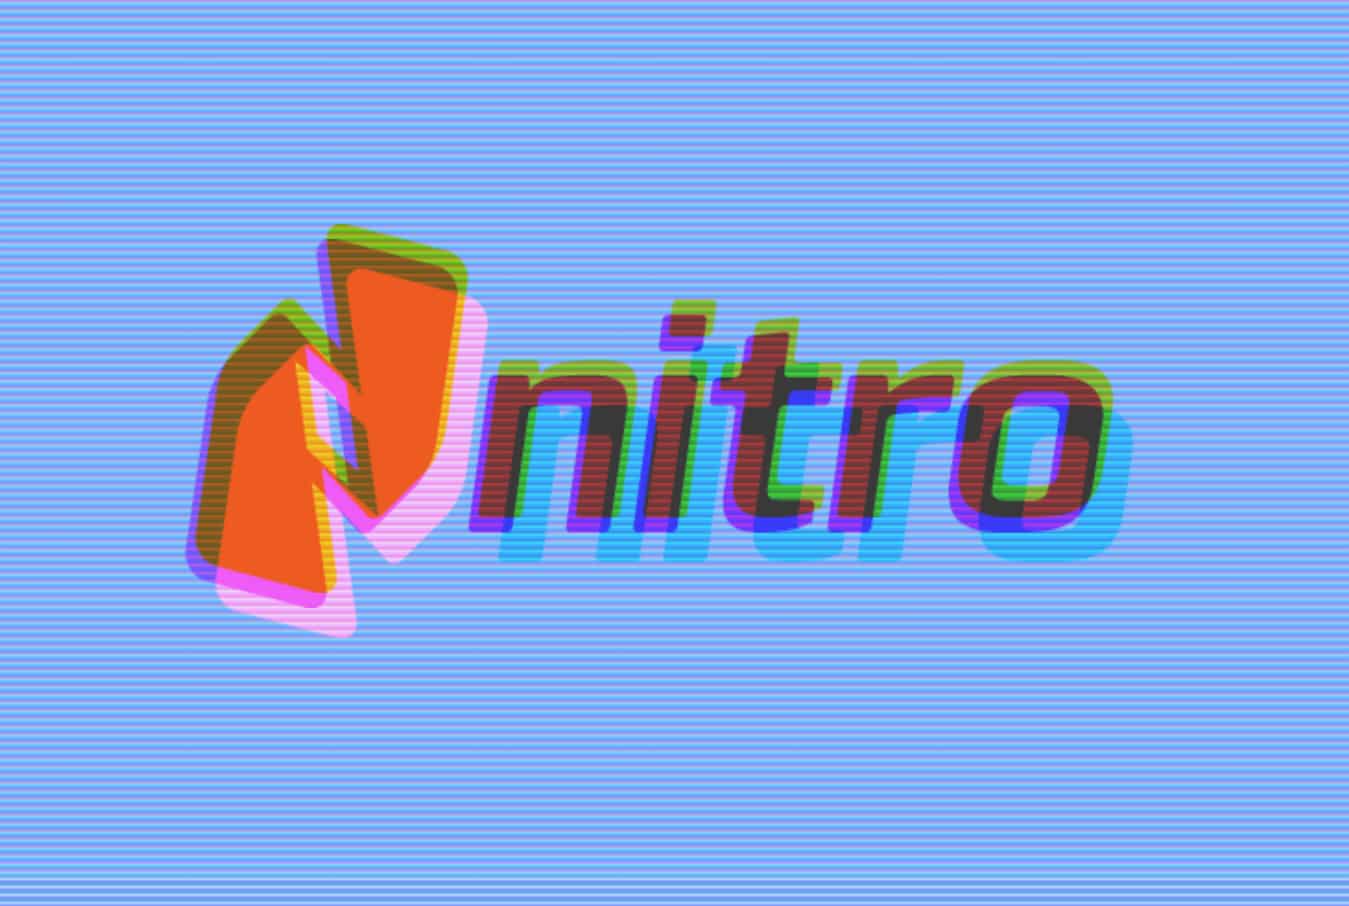 Nitro software data breach: Hackers claim selling customer data